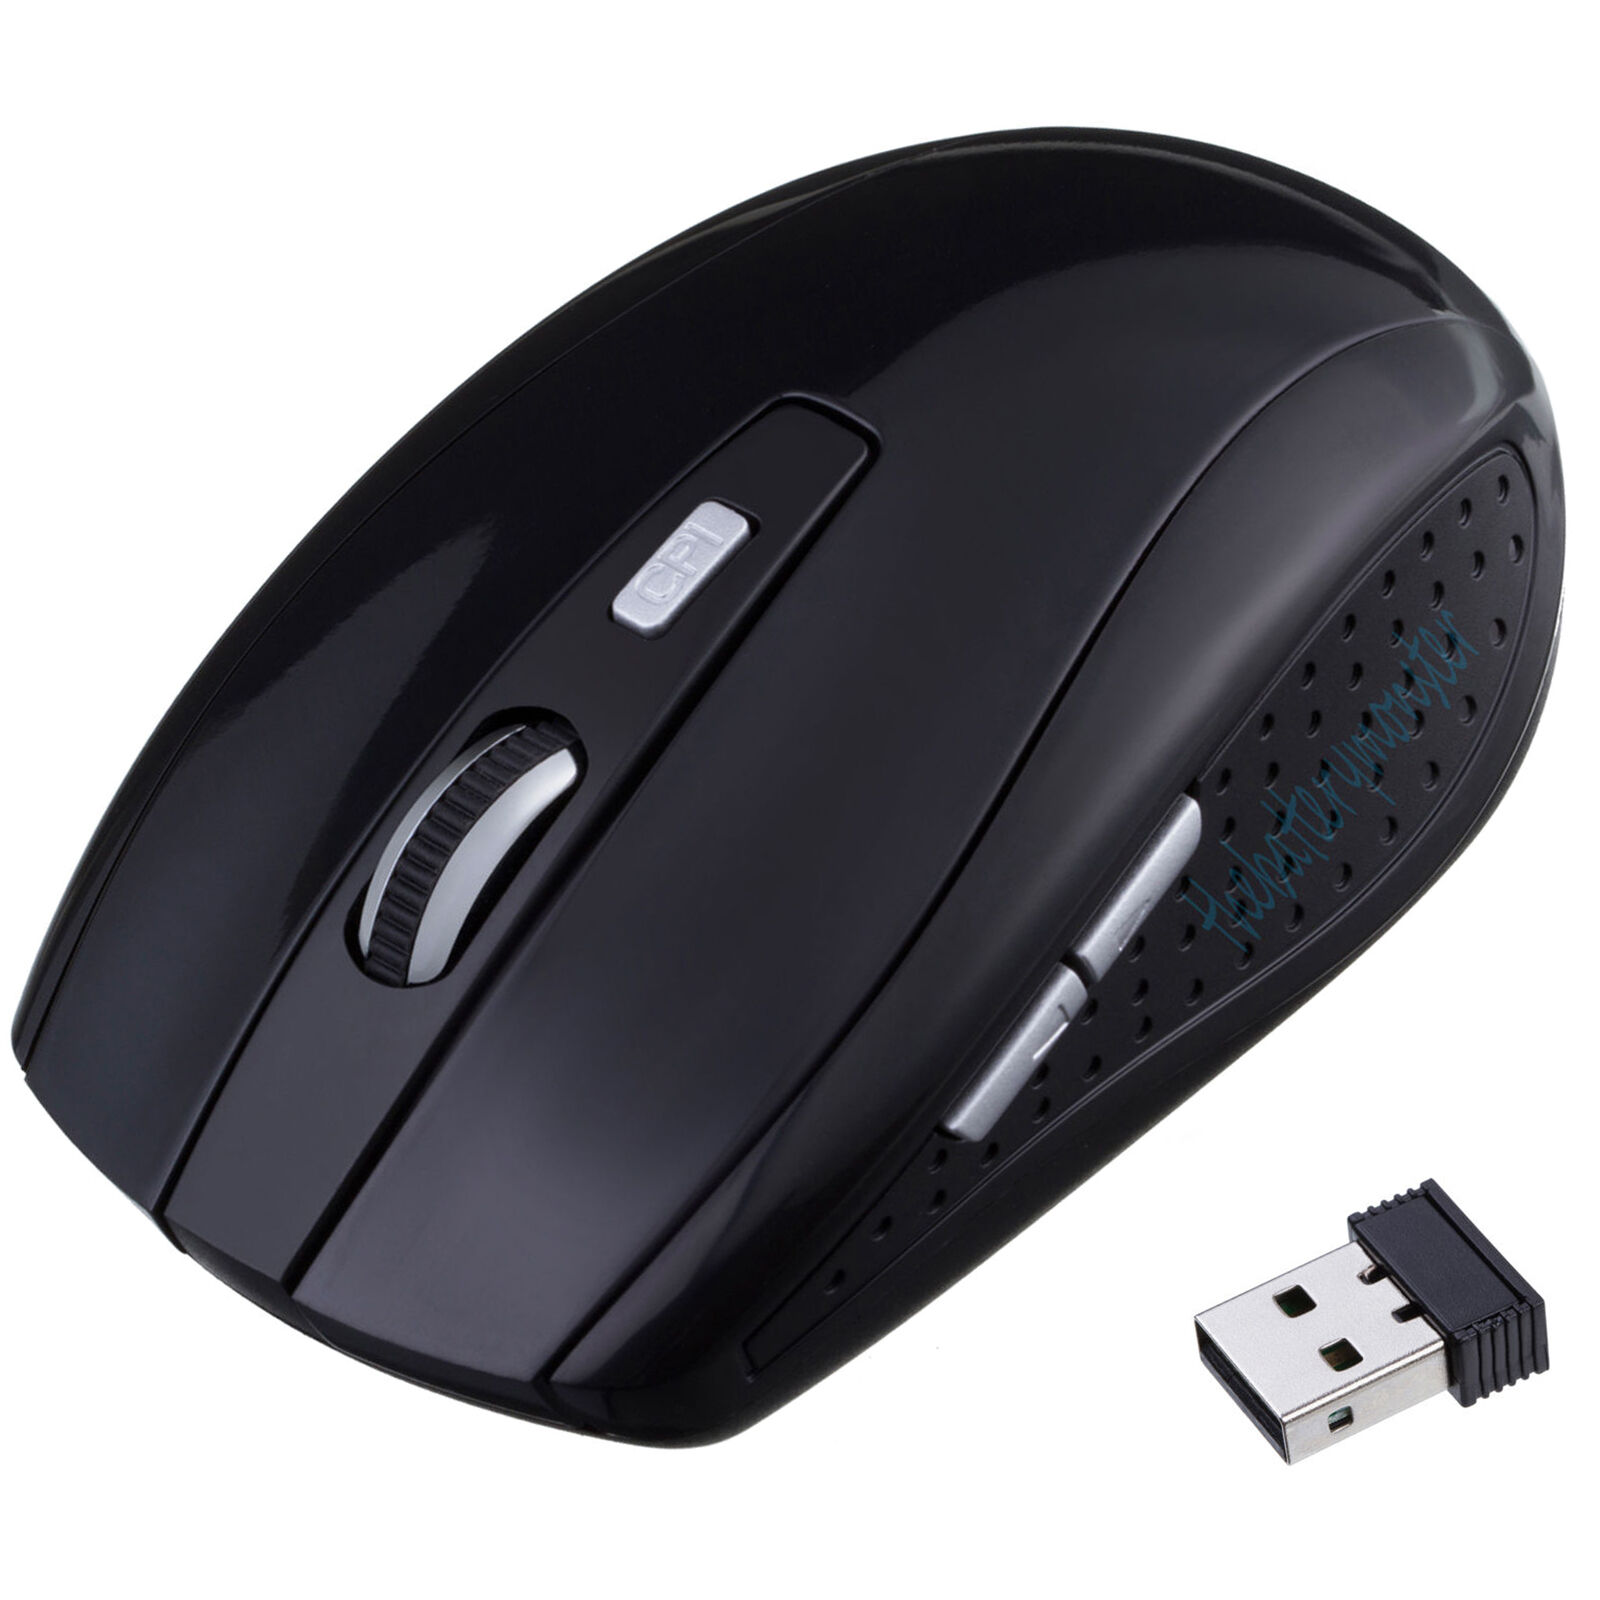 2.4GHz Wireless Optical Mouse &USB Receiver Adjustable DPI for PC Desktop Laptop